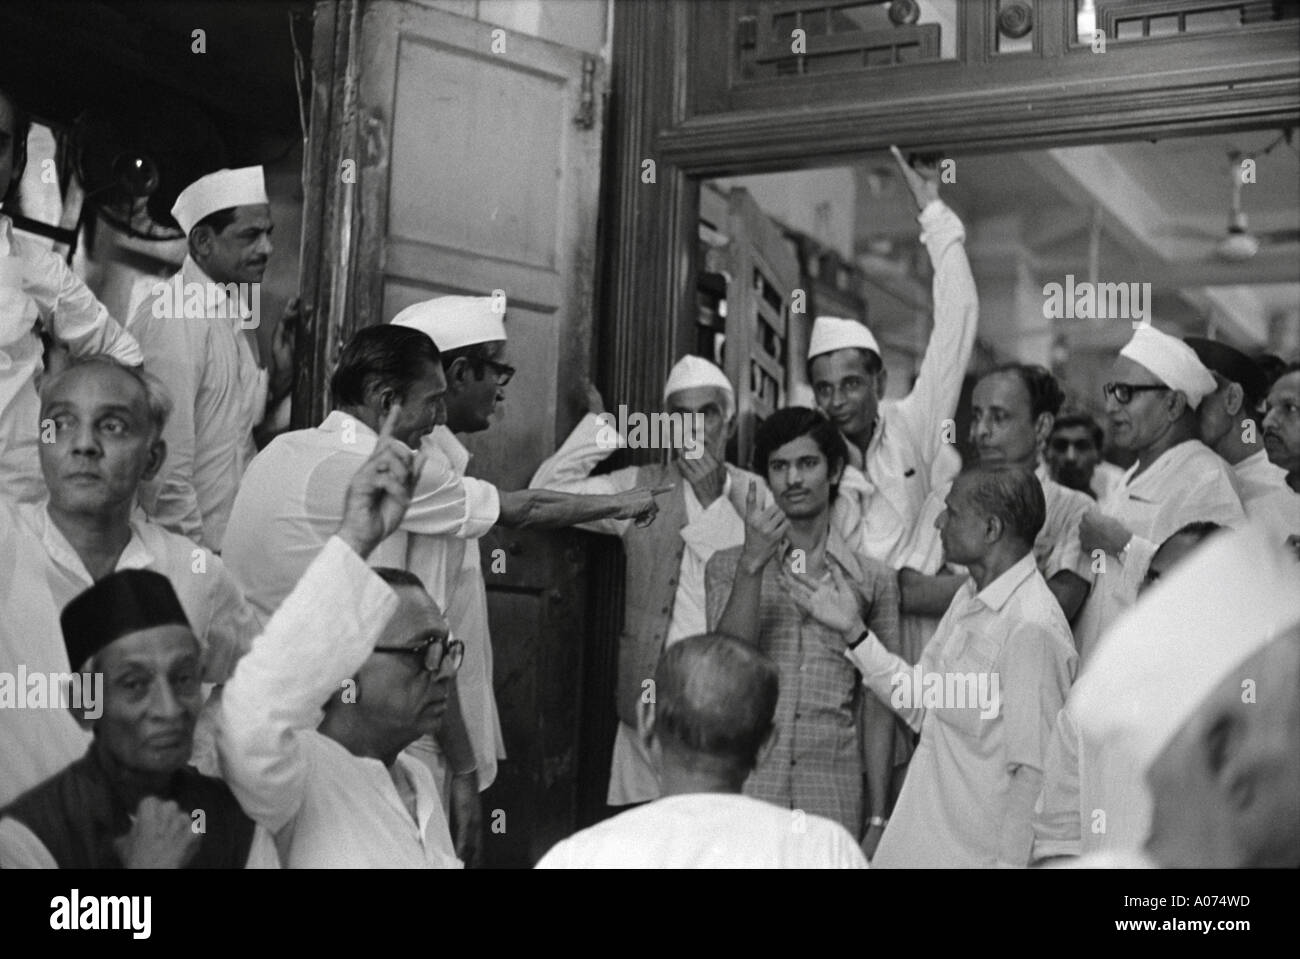 Old vintage 1970s Stock Exchange men dressed in Indian dress kurta Gandhi topi cap hat trading at Bombay Mumbai Maharashtra India Indian Asia Asian Stock Photo